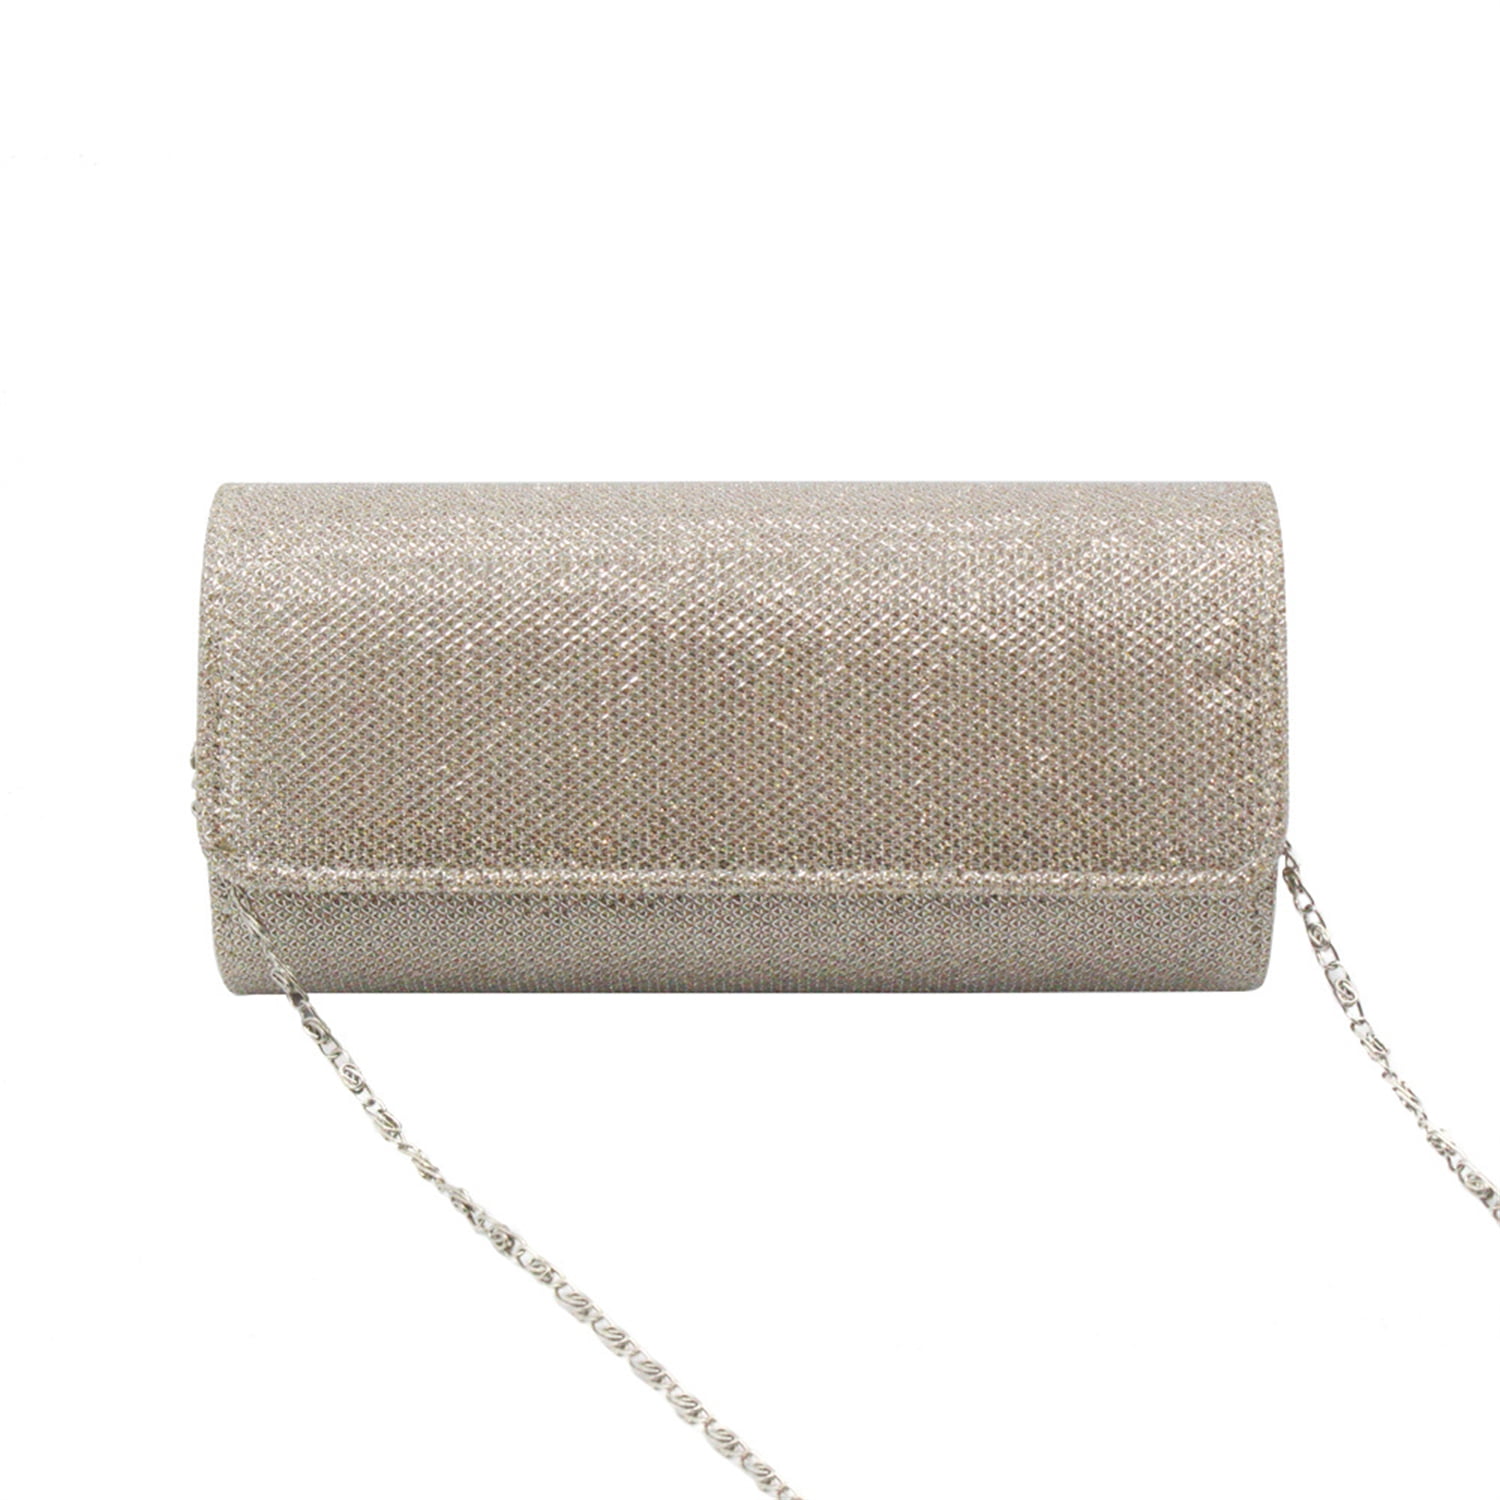 KATIE LOXTON Zara Metallic Silver Clutch Bag